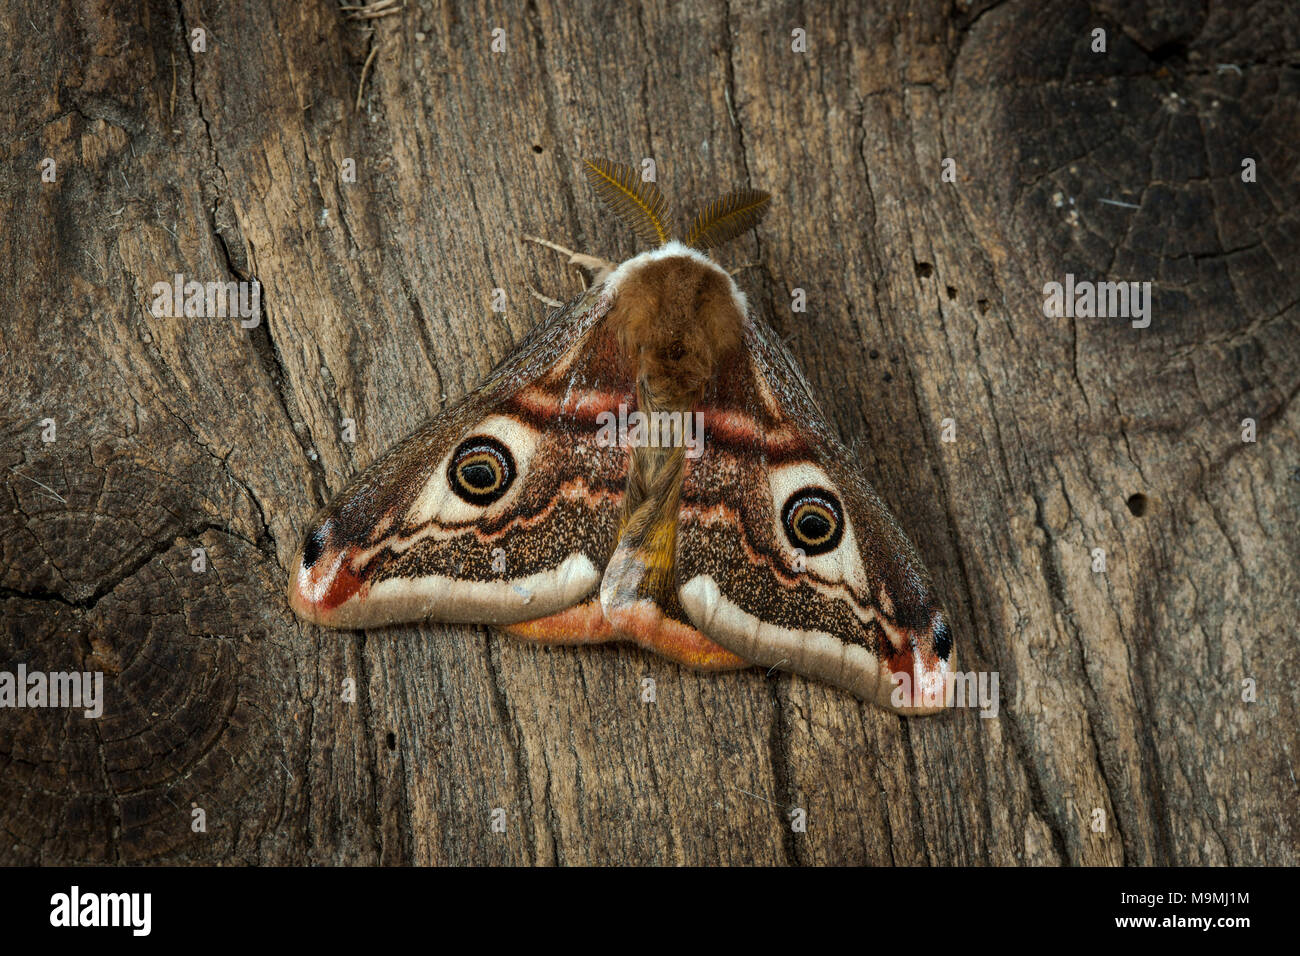 https://c8.alamy.com/comp/M9MJ1M/emperor-moth-saturnia-pavonia-male-on-wood-germany-M9MJ1M.jpg